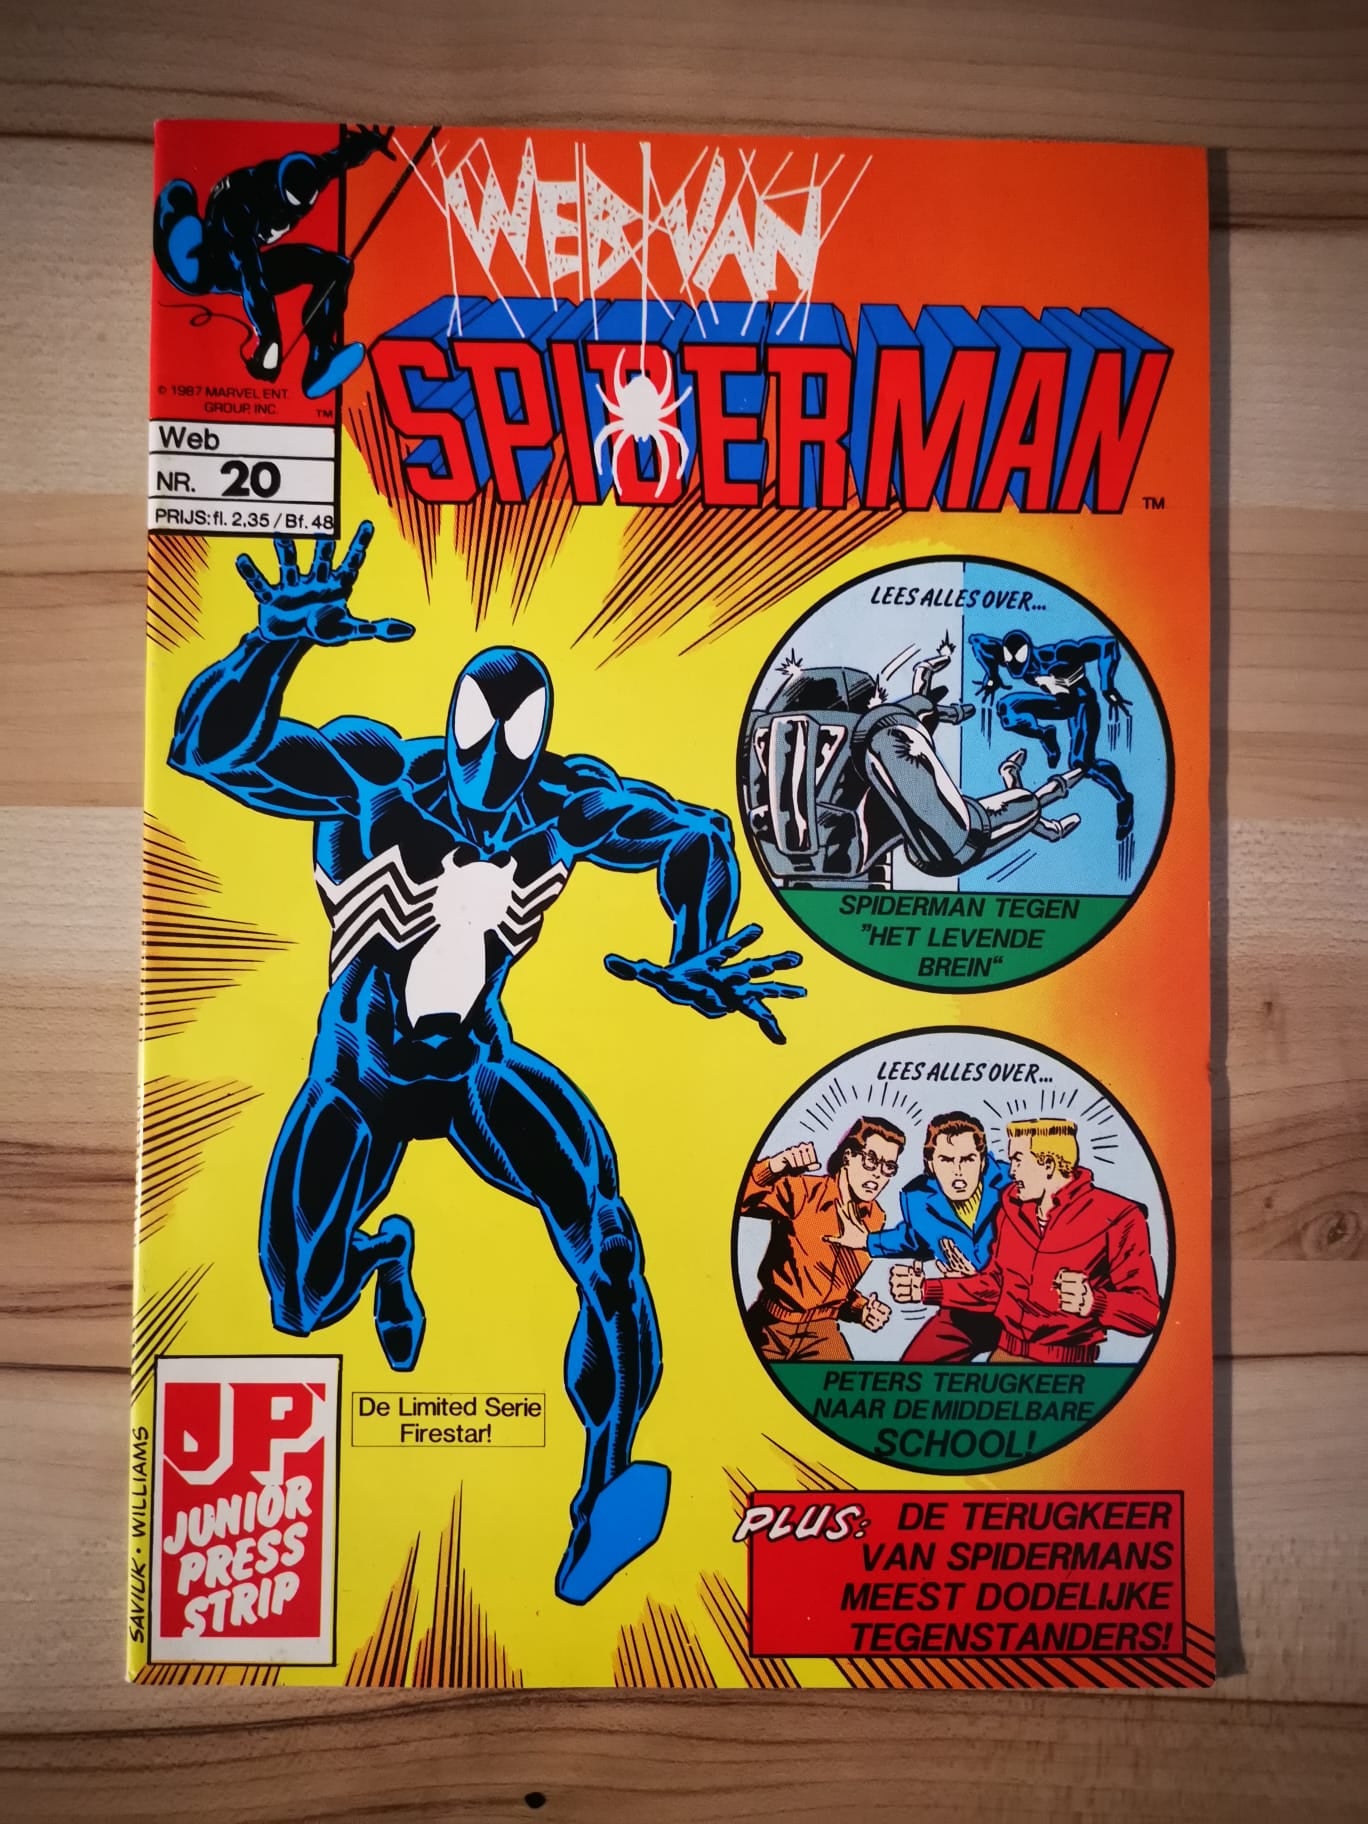 Web van spiderman #20